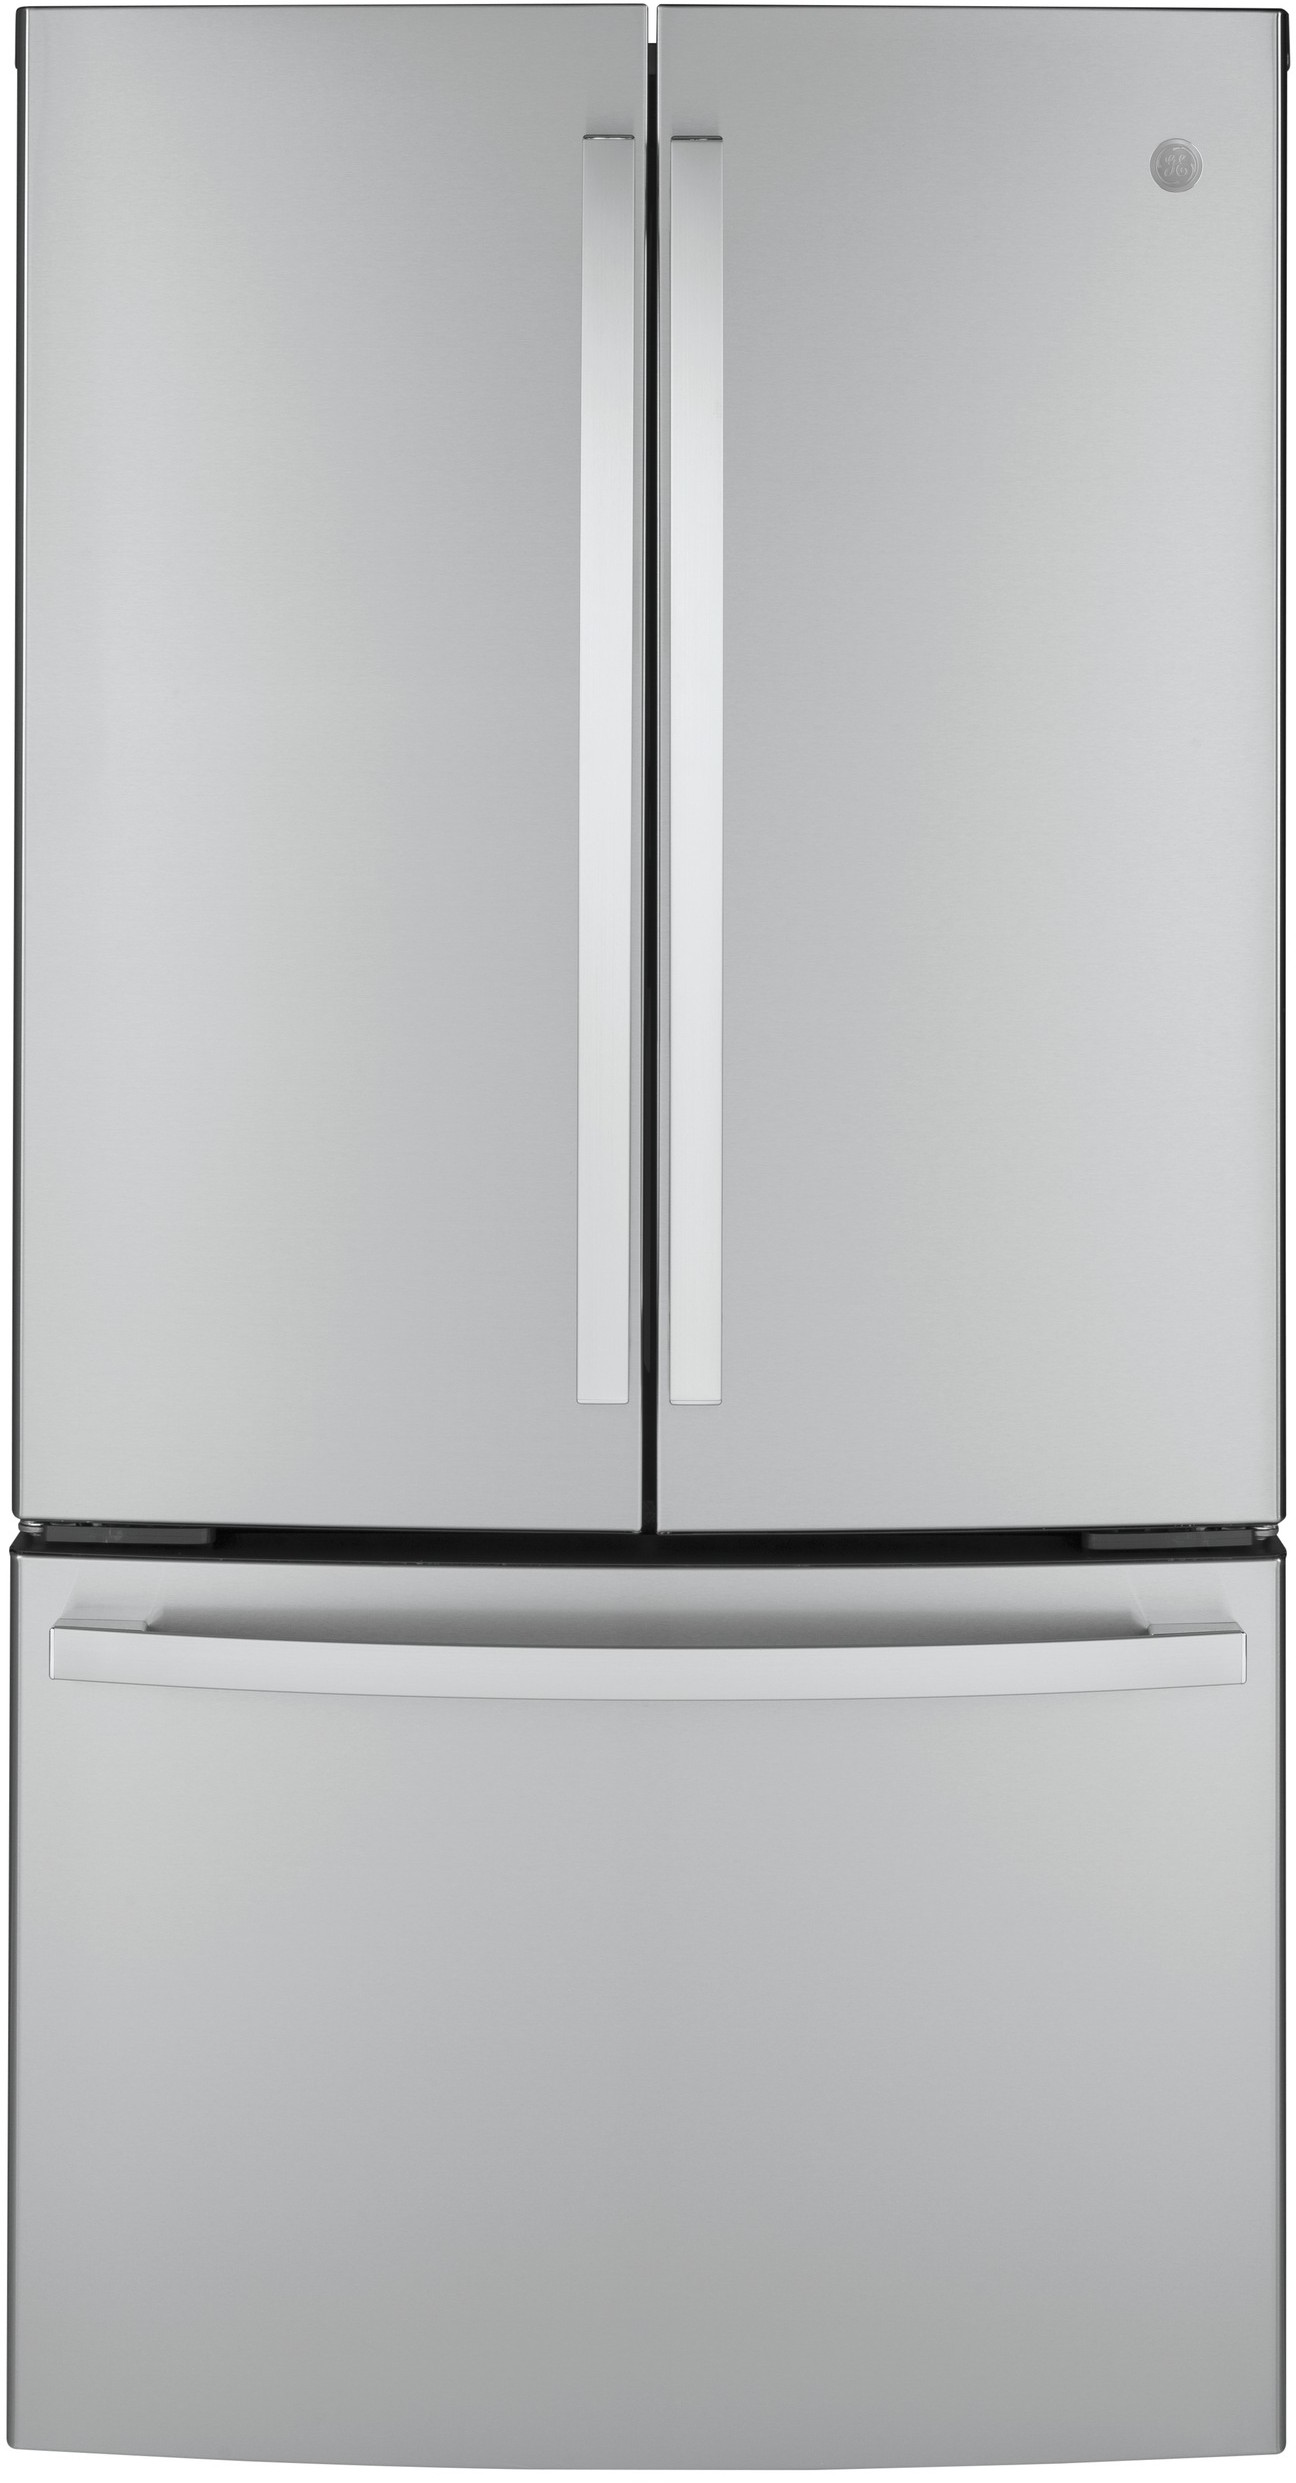 Counter Depth French Door Refrigerator, How To Adjust Shelves In Ge Refrigerator